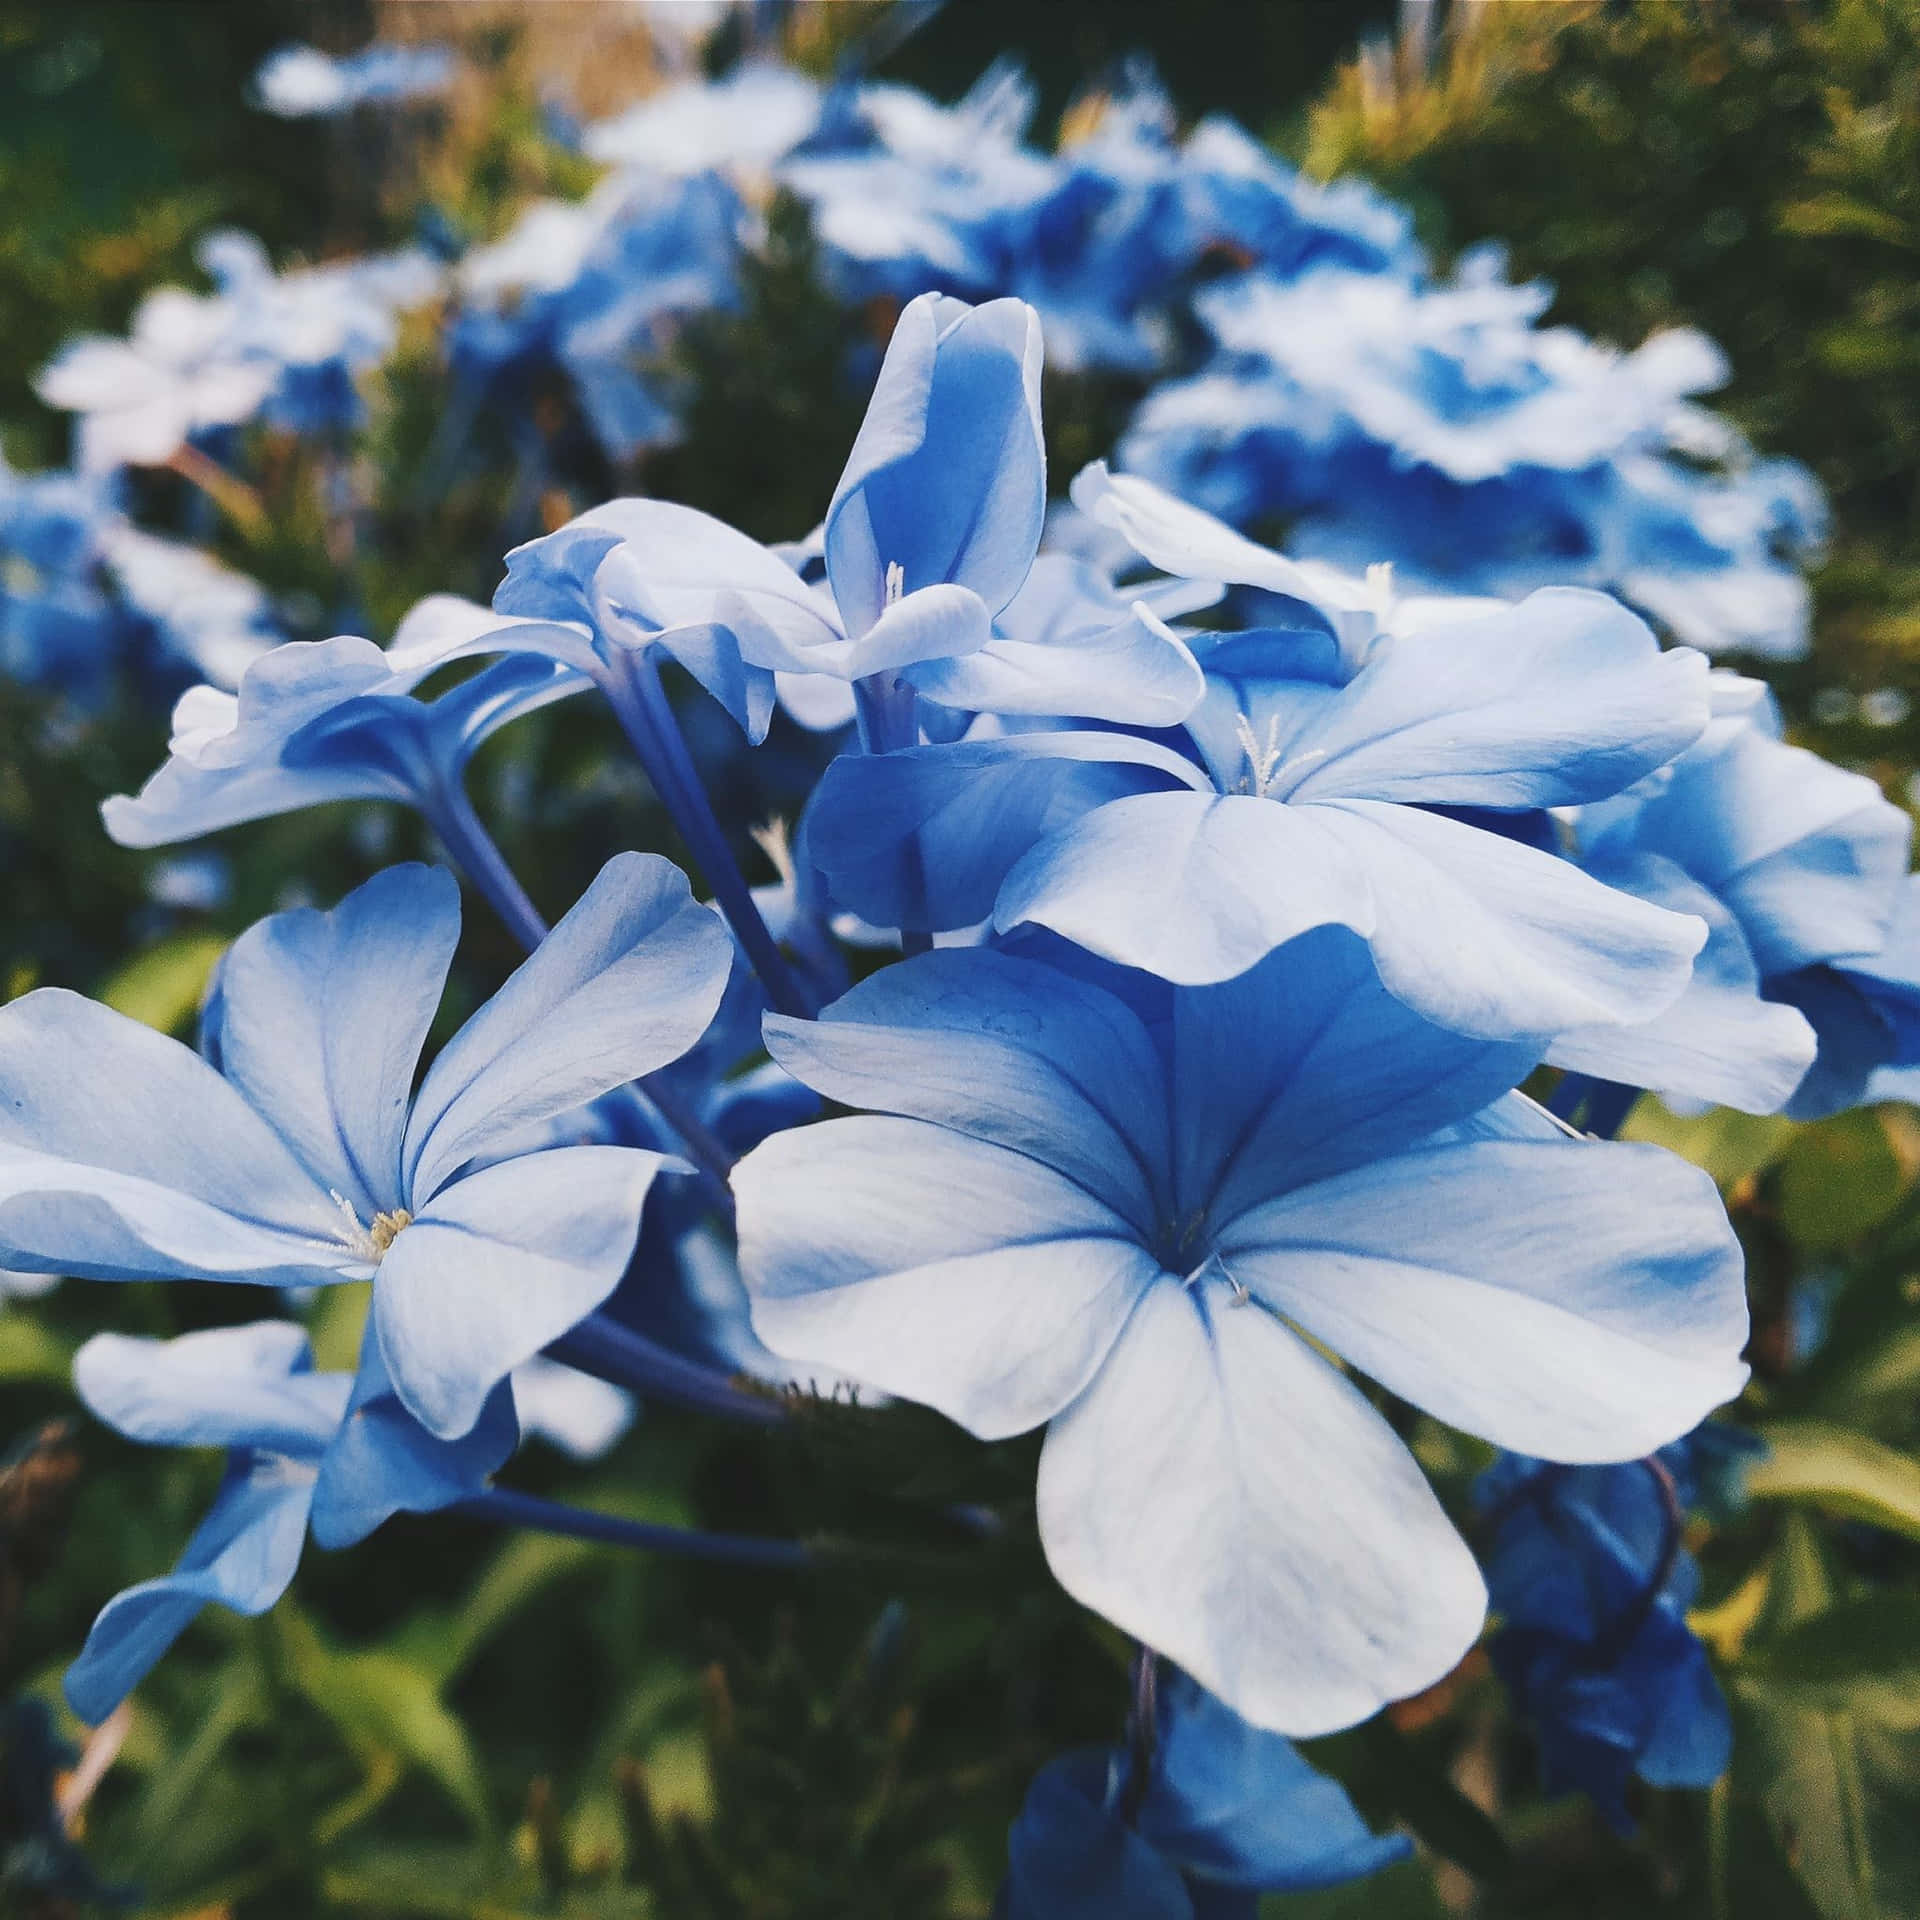 "The Beauty of Blue Flowers" Wallpaper